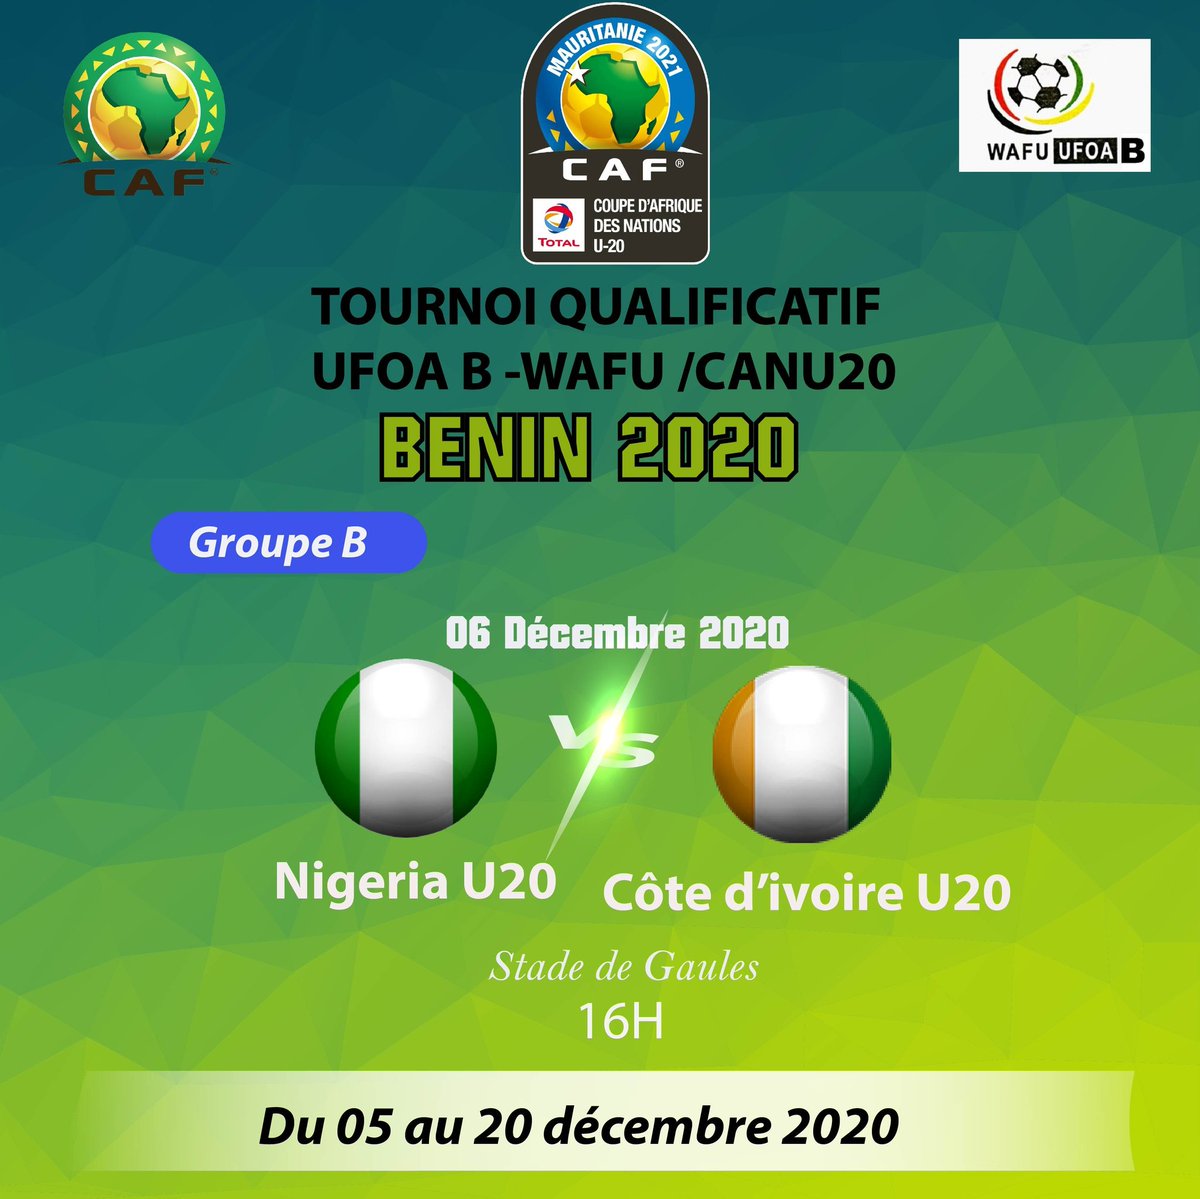 UFOA-WAFU ZONE B Twitter: "⚽️ 2éme JOURNÉE | TOURNOI QUALIFICATIF BENIN 2020 🇳🇬 NIGERIA U20 D'IVOIRE U20 🇨🇮 🏟 Stade Gaules (porto novo) 🕑 16h00 🇬🇭 GHANA U20 (EXEMPT)… https://t.co/UhnFND7SU1"